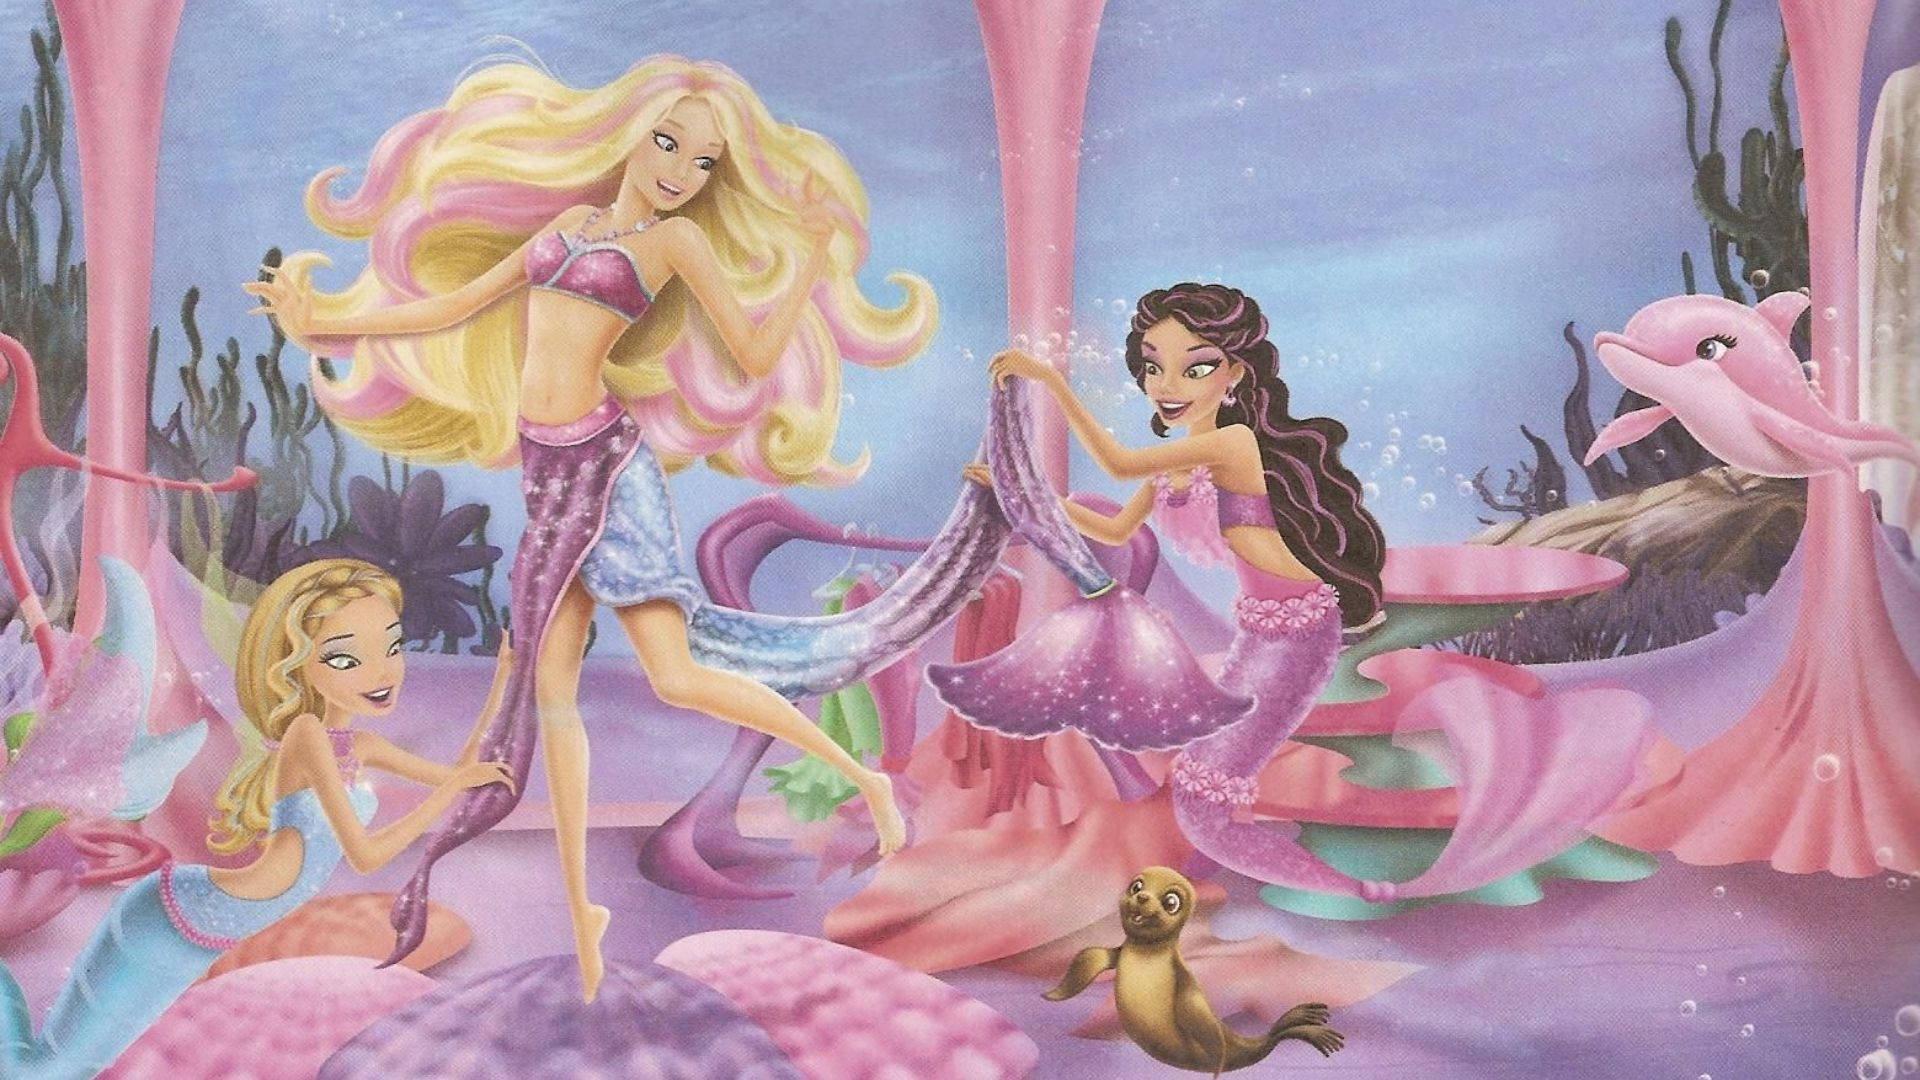 Barbiemeerjungfrau Enthüllt Ihre Beine. Wallpaper